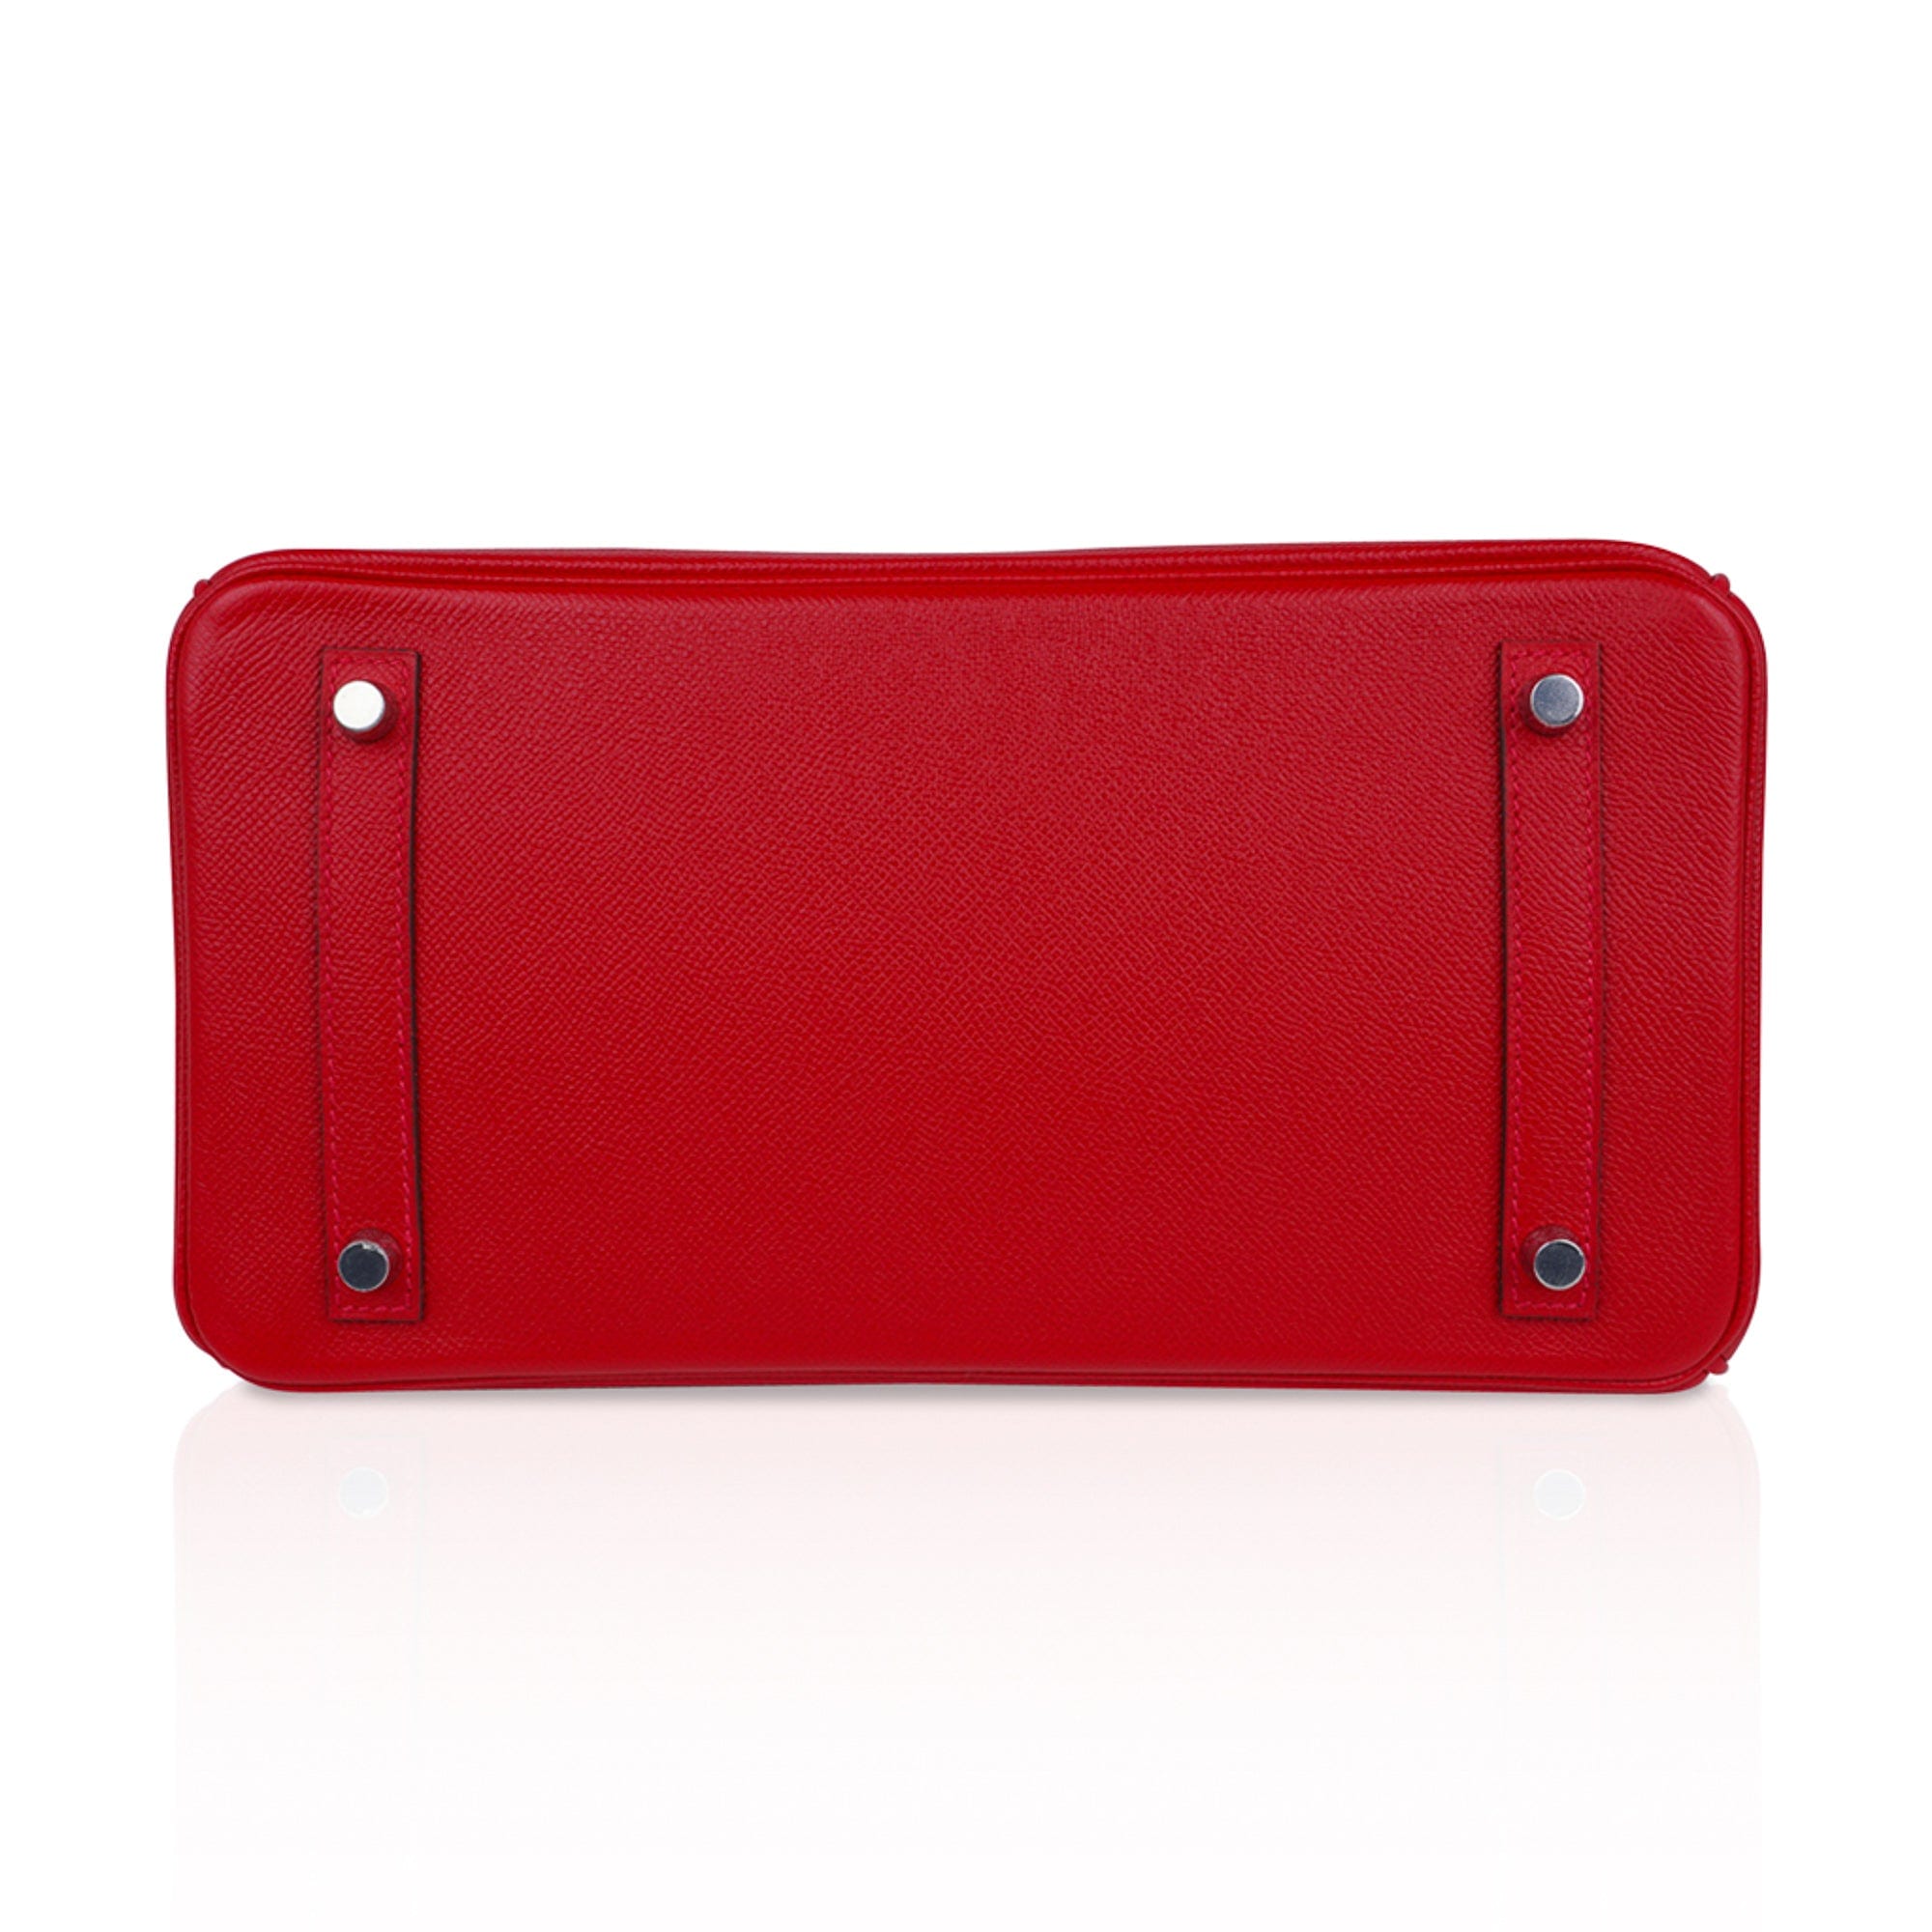 Hermes Birkin 30 and Kelly wallet - Rouge Casaque ❤️❤️ #hermes #birkin  #hermesbirkin #redbirkin #…